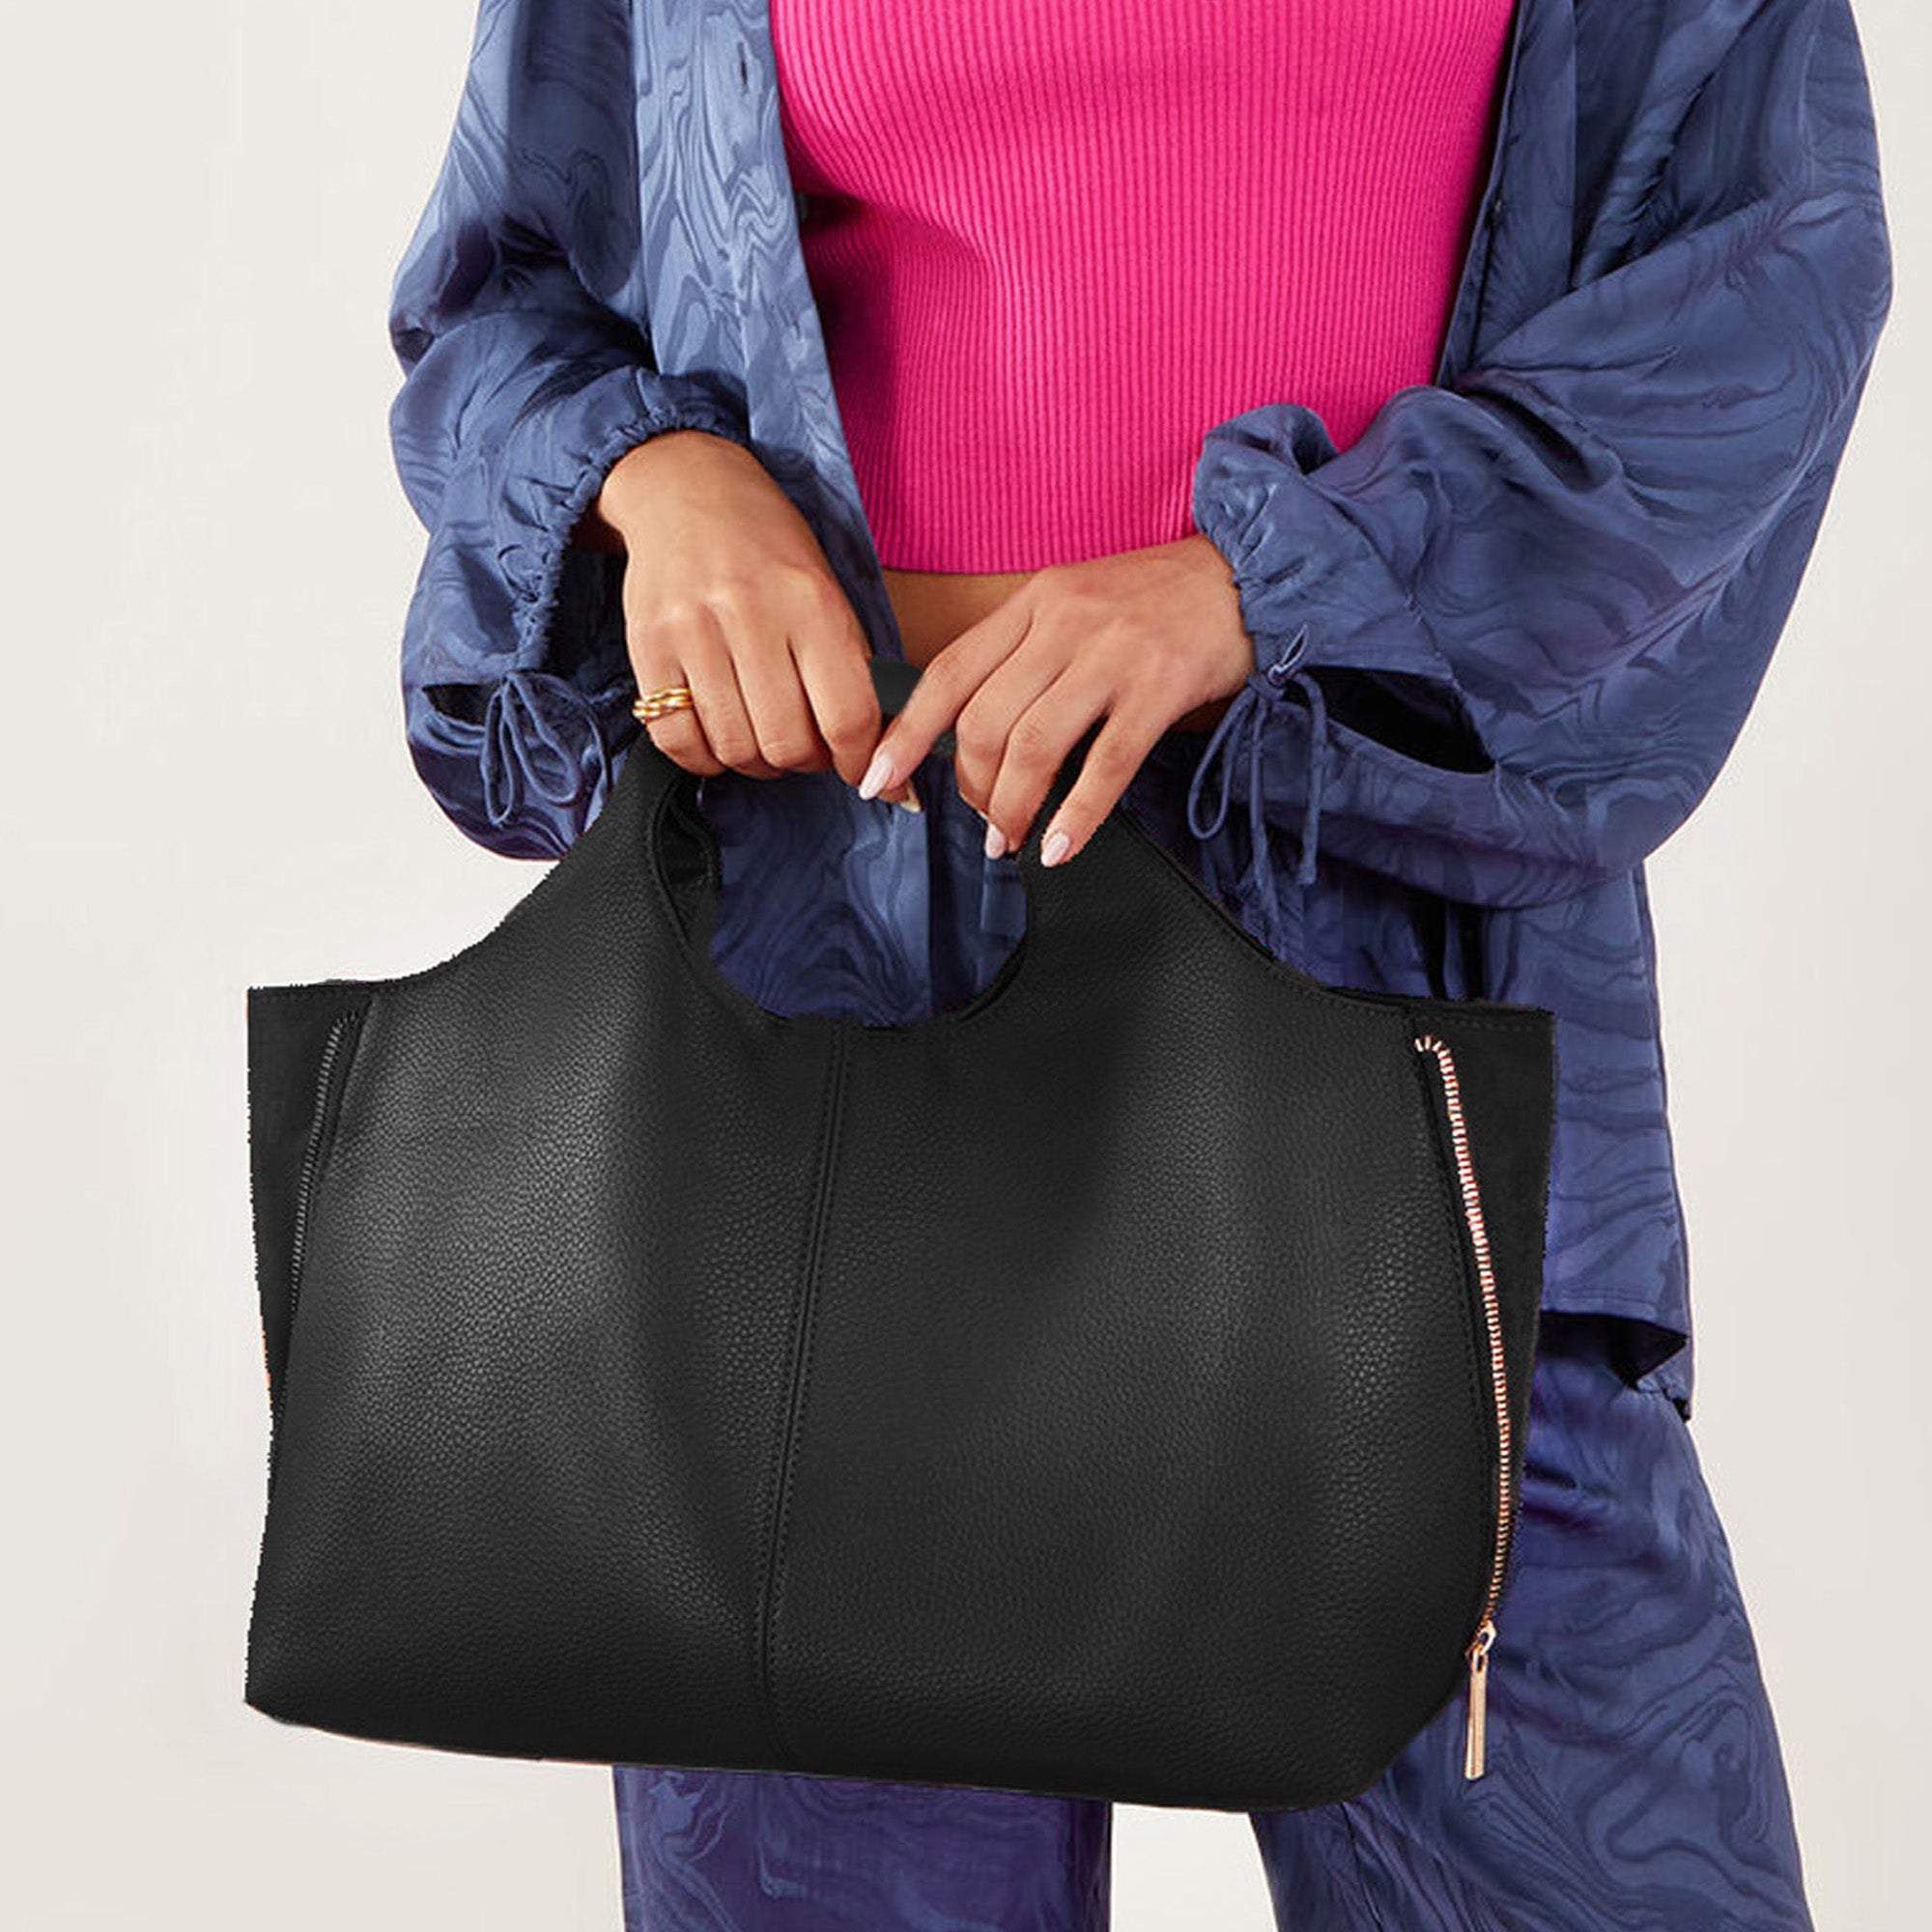 Women's Black Wrap Handle Handheld Bag